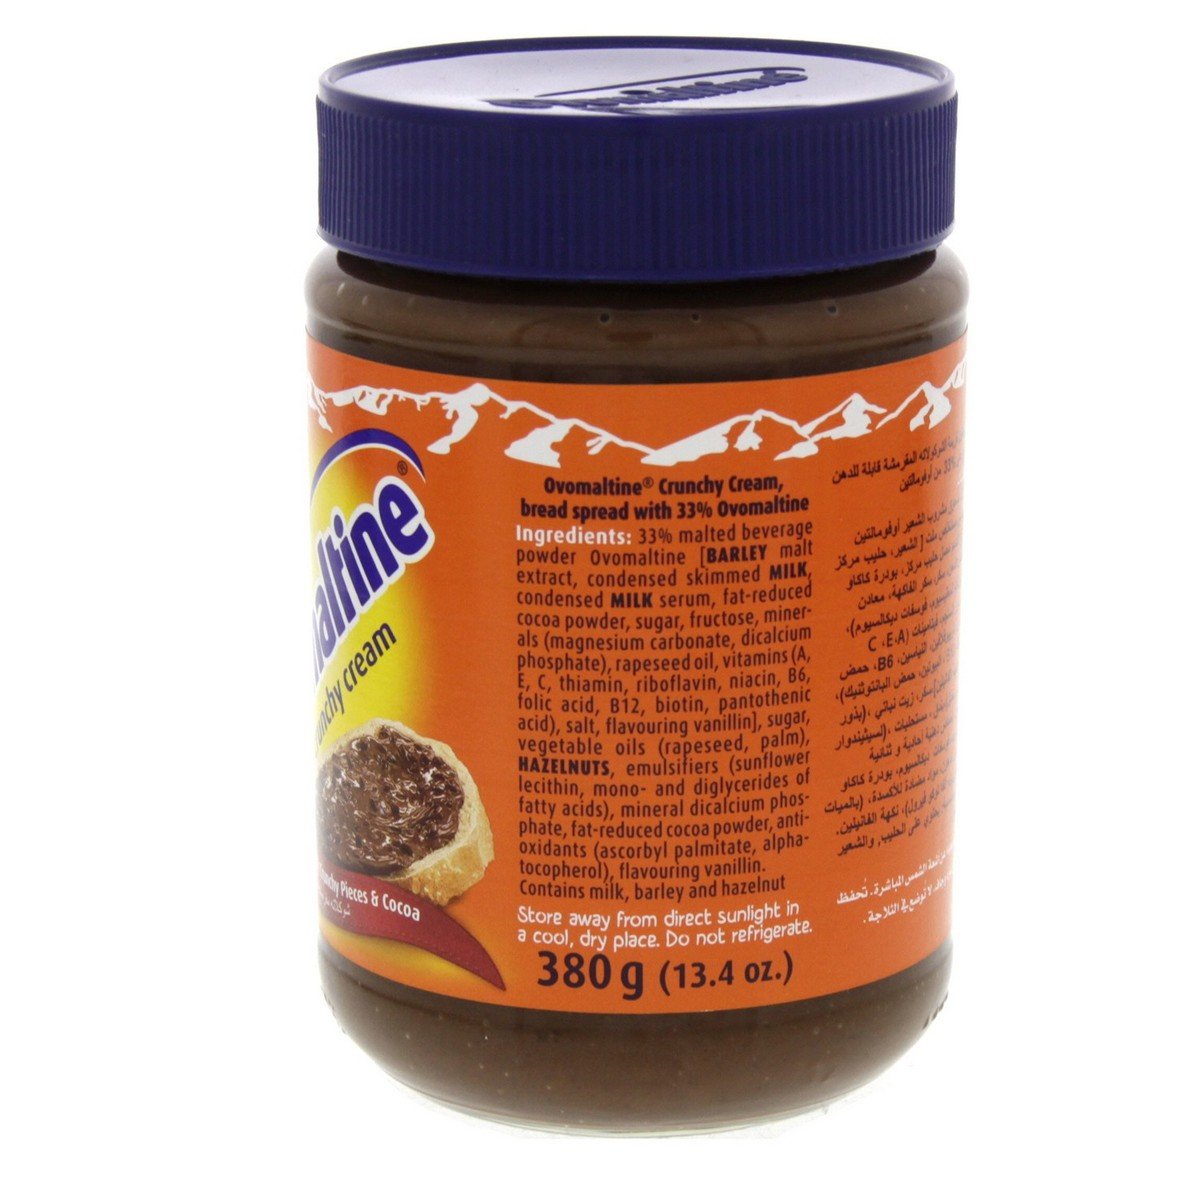 Ovomaltine Crunchy Cream Choco Spread 380 g